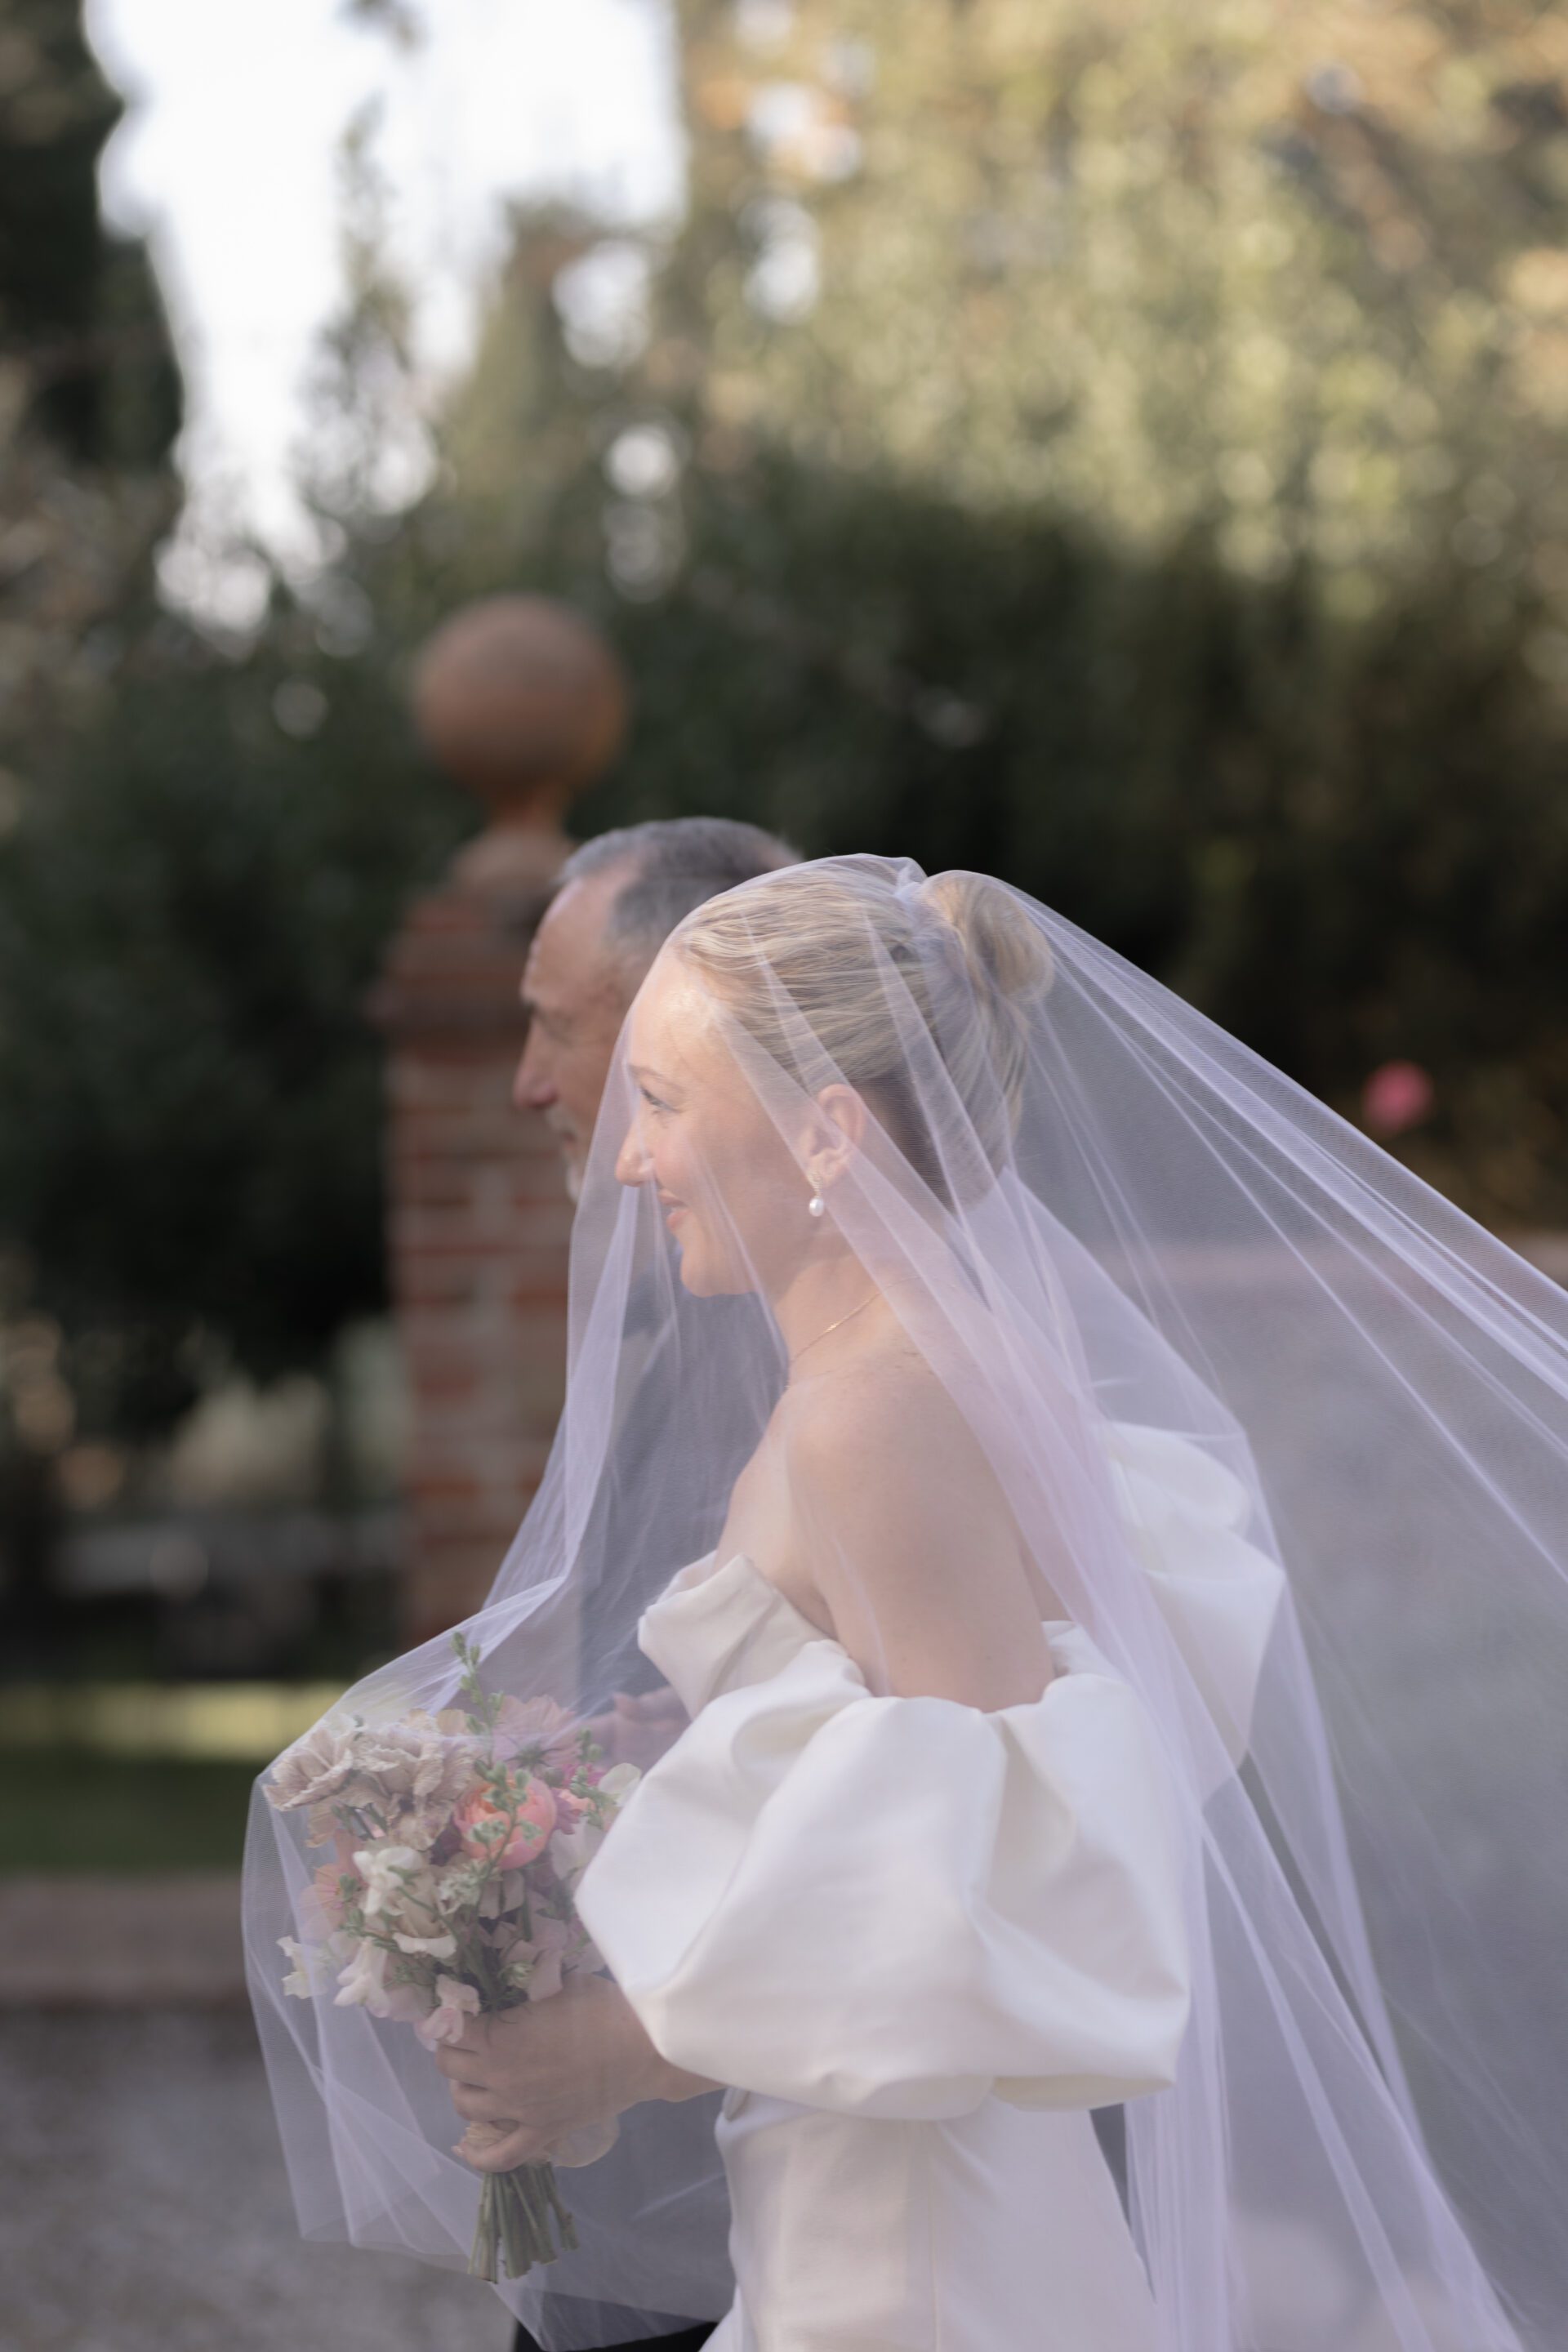 Editorial wedding photography at Italian wedding in Tuscany